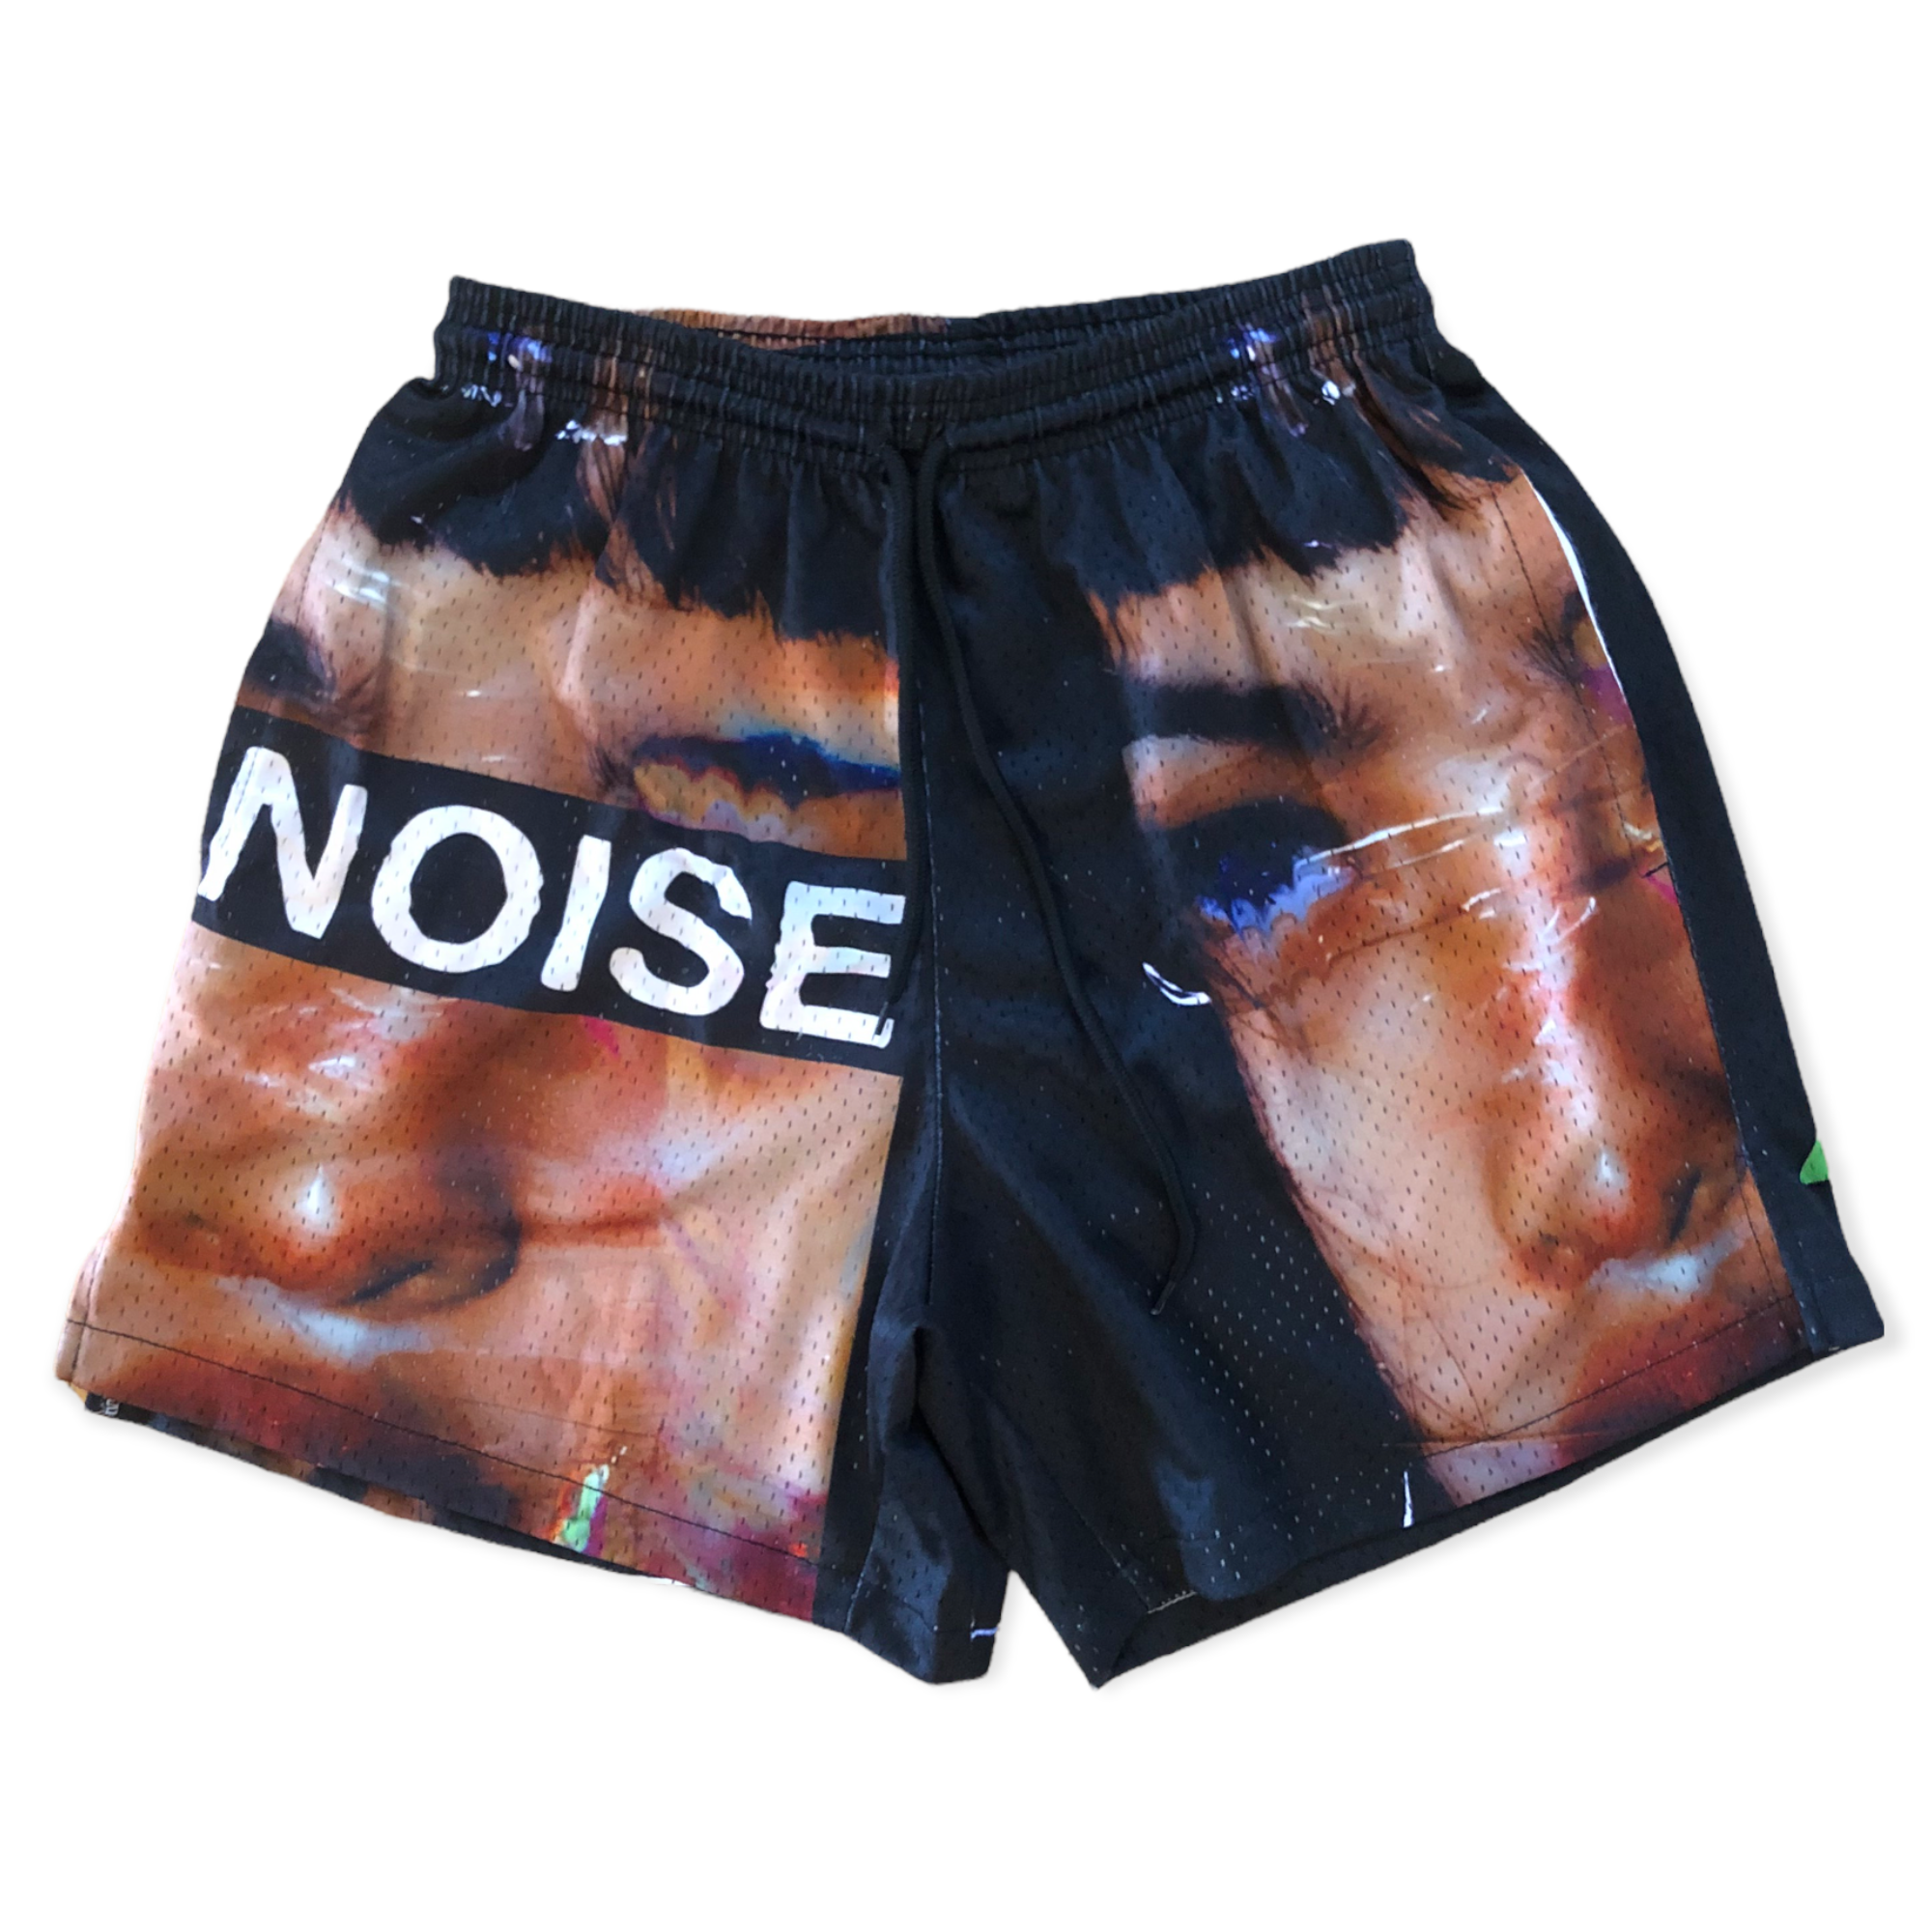 DKS "NOISE" Mesh Shorts